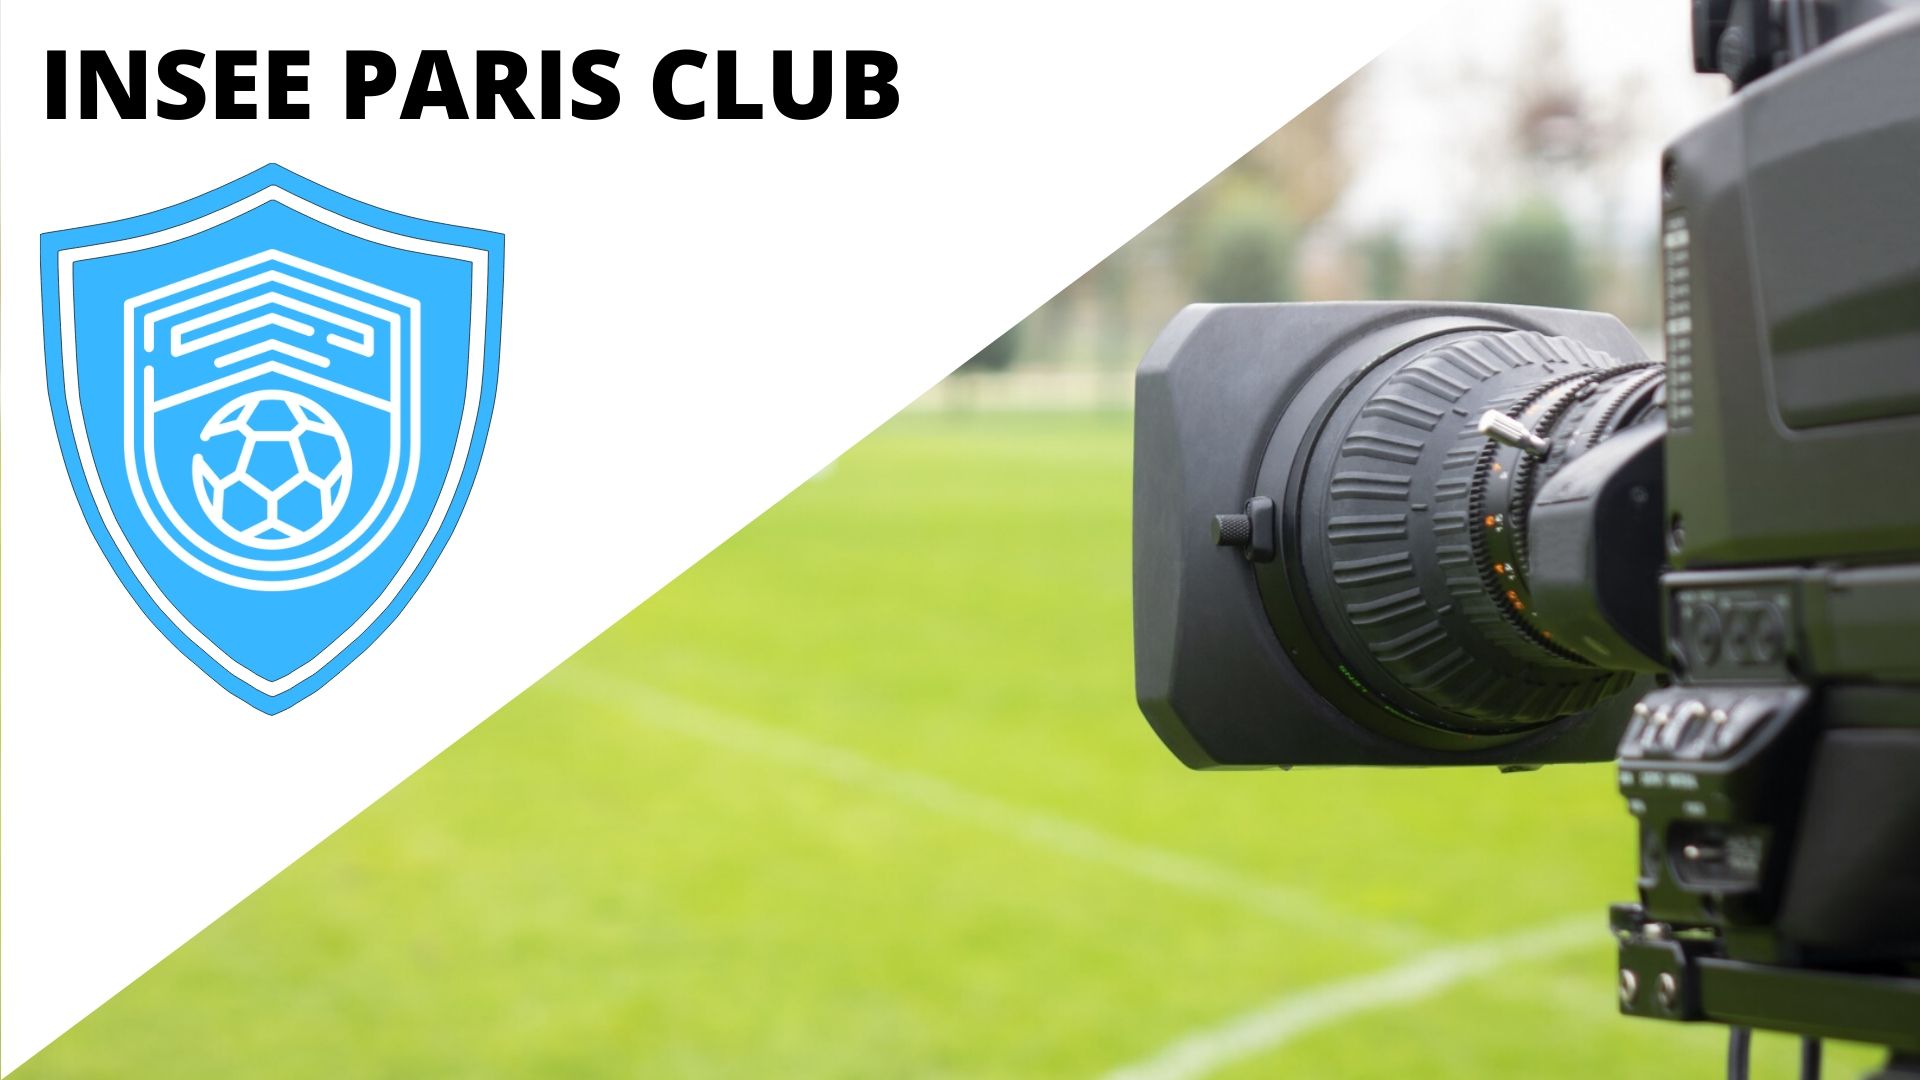 INSEE PARIS CLUB (92)